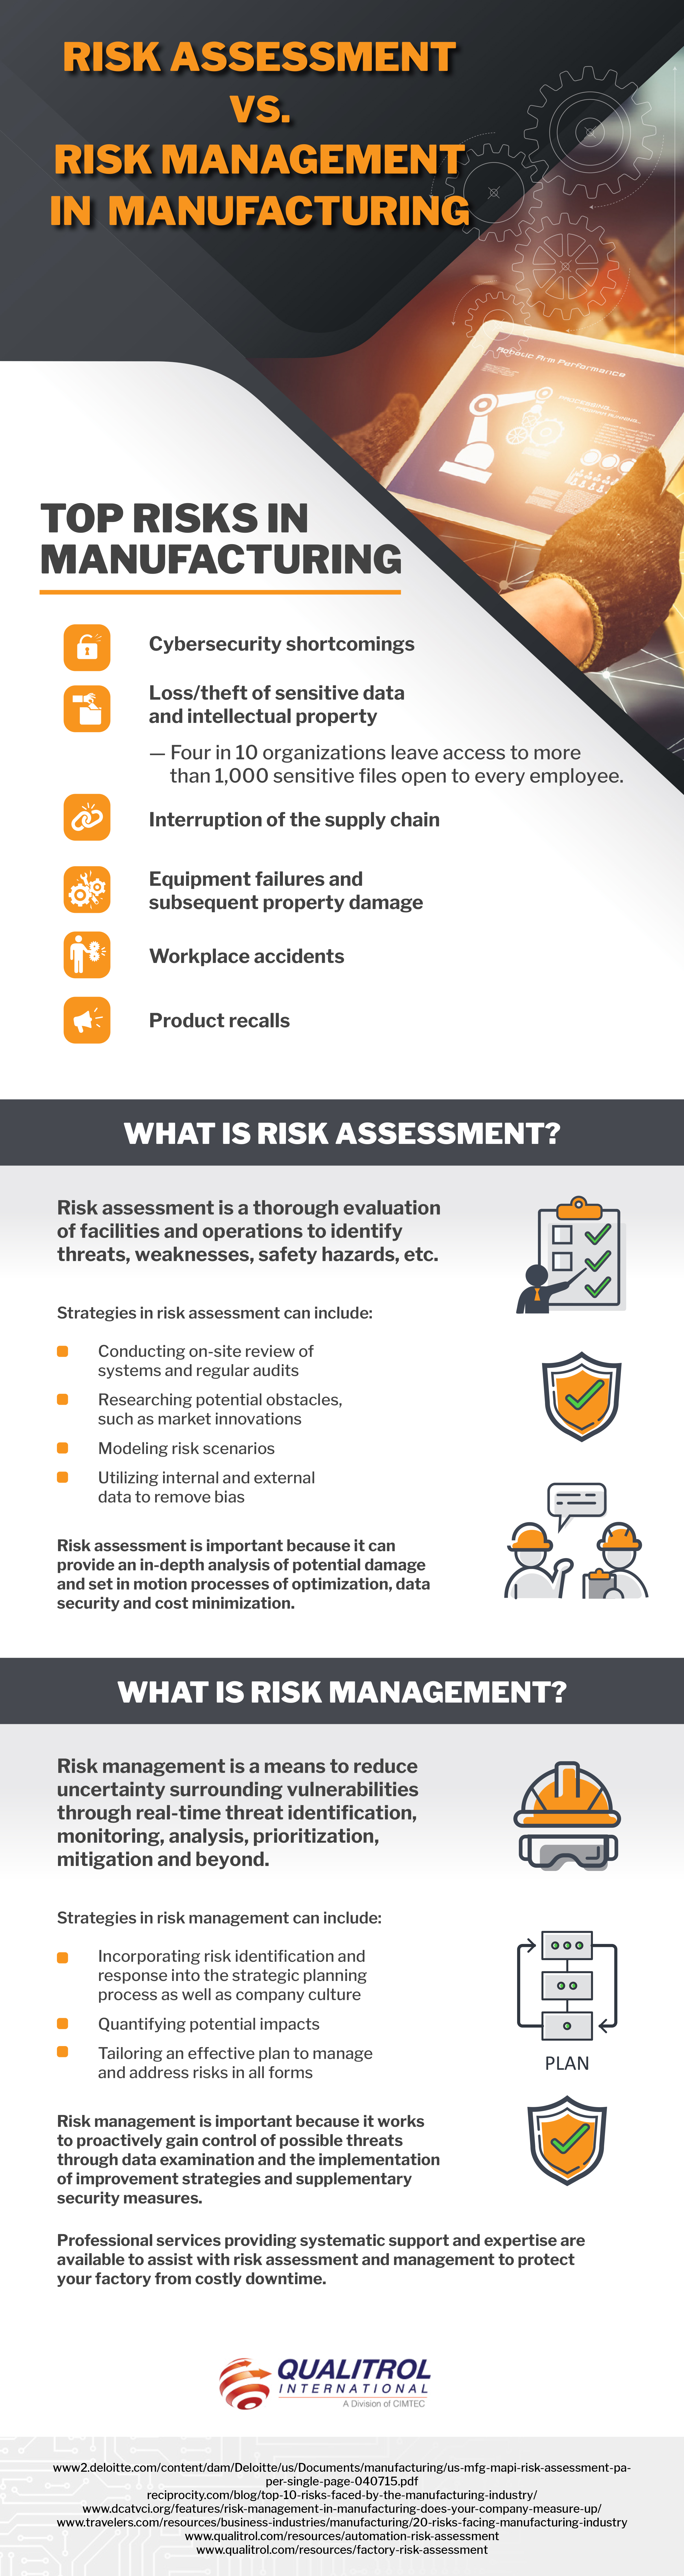 Risk Assessment Vs Risk Management Infographic Qualitrol, Industry Today